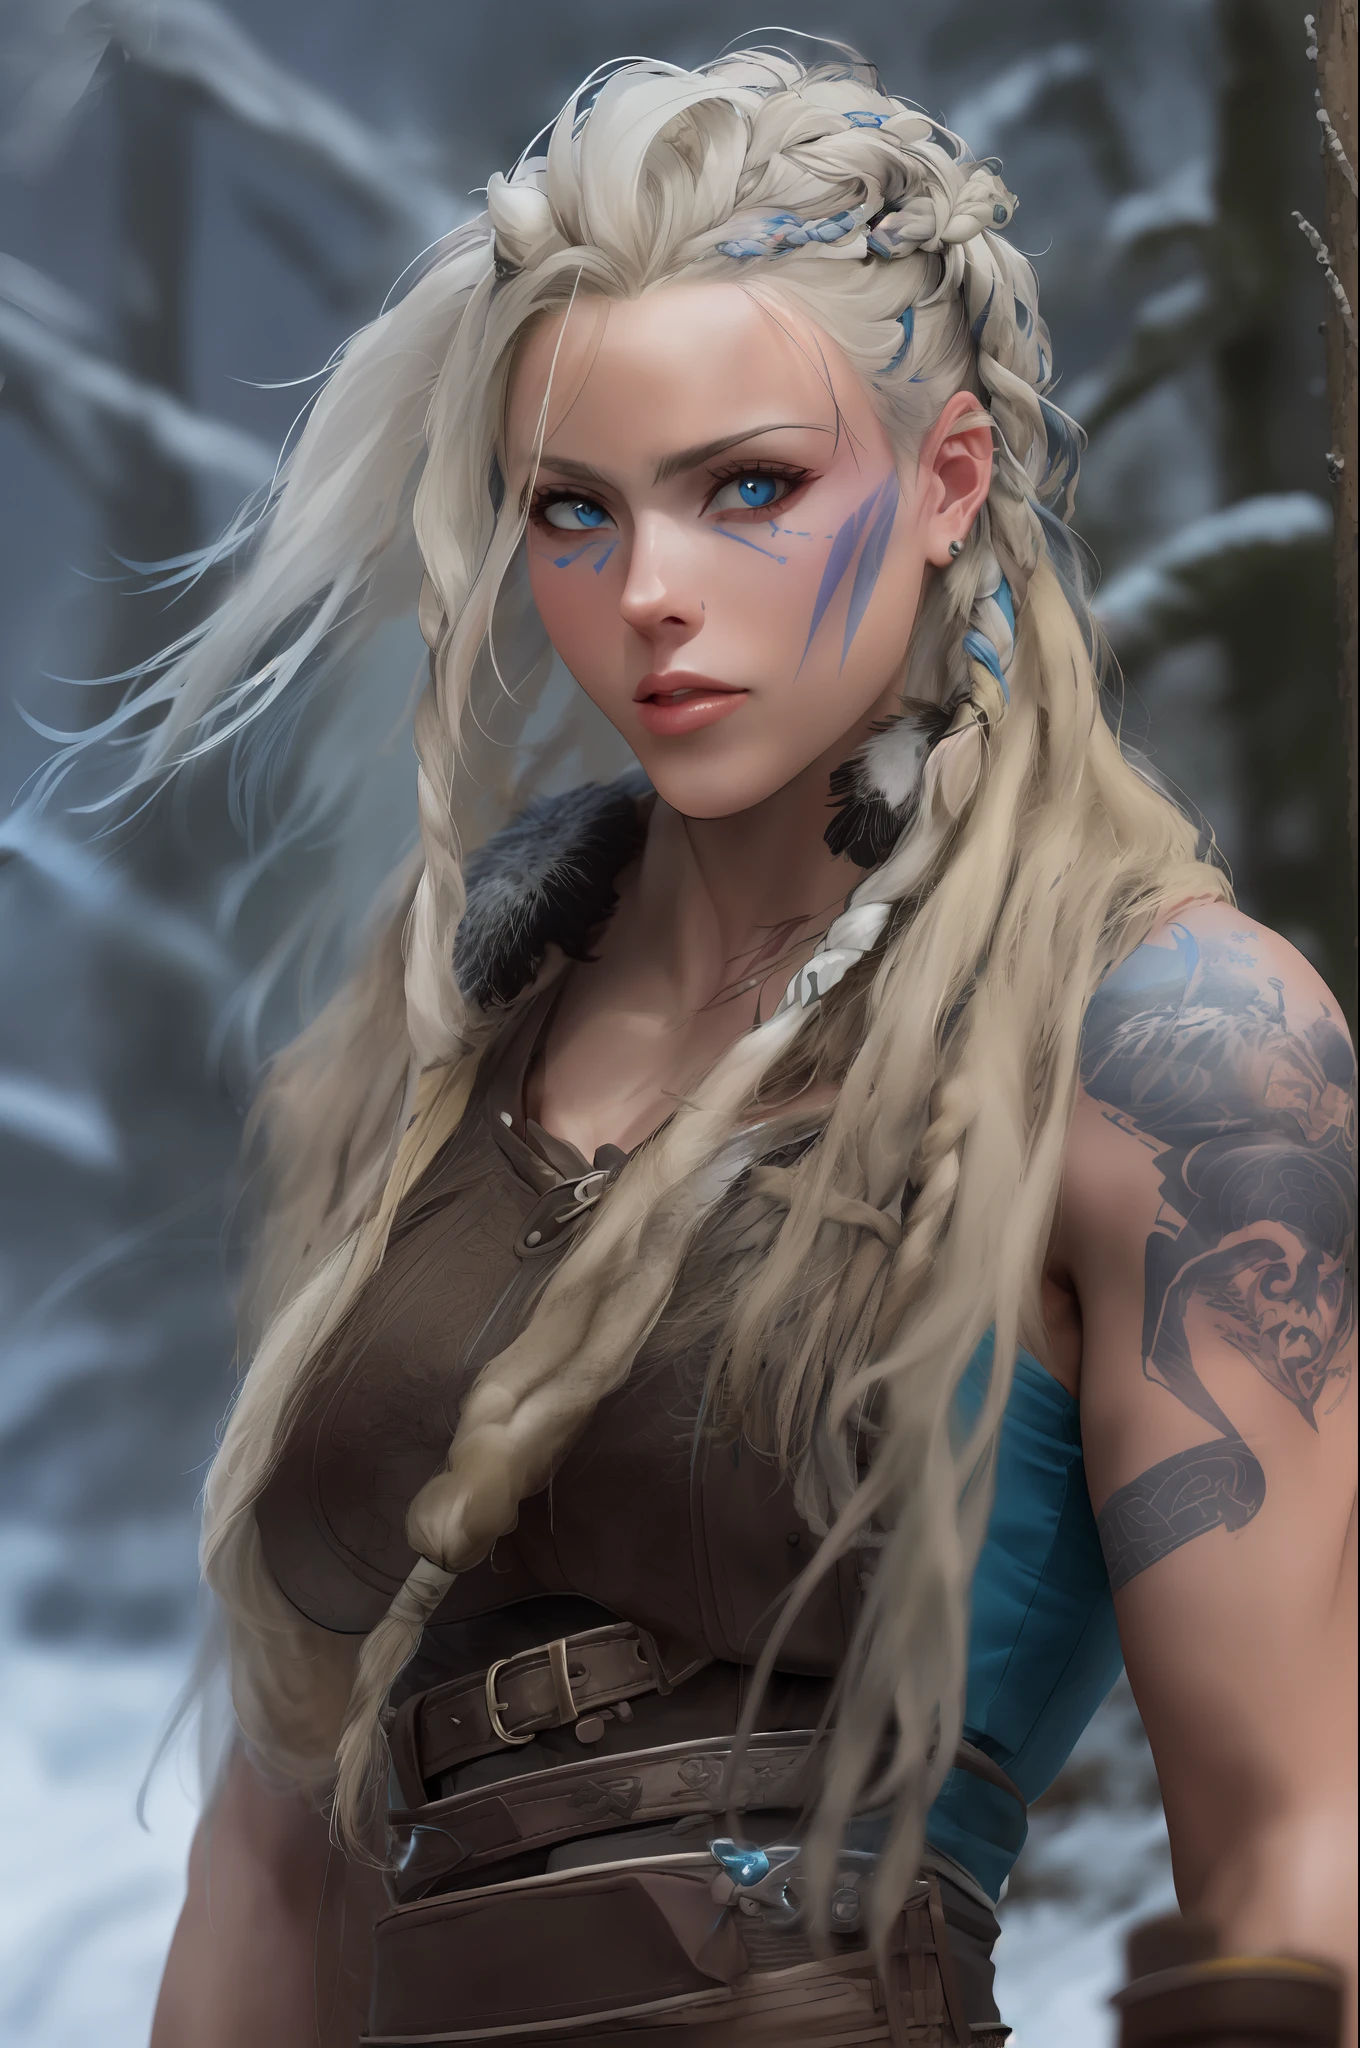 Viking princess, blonde hair, blue eyes, oval face, large breast